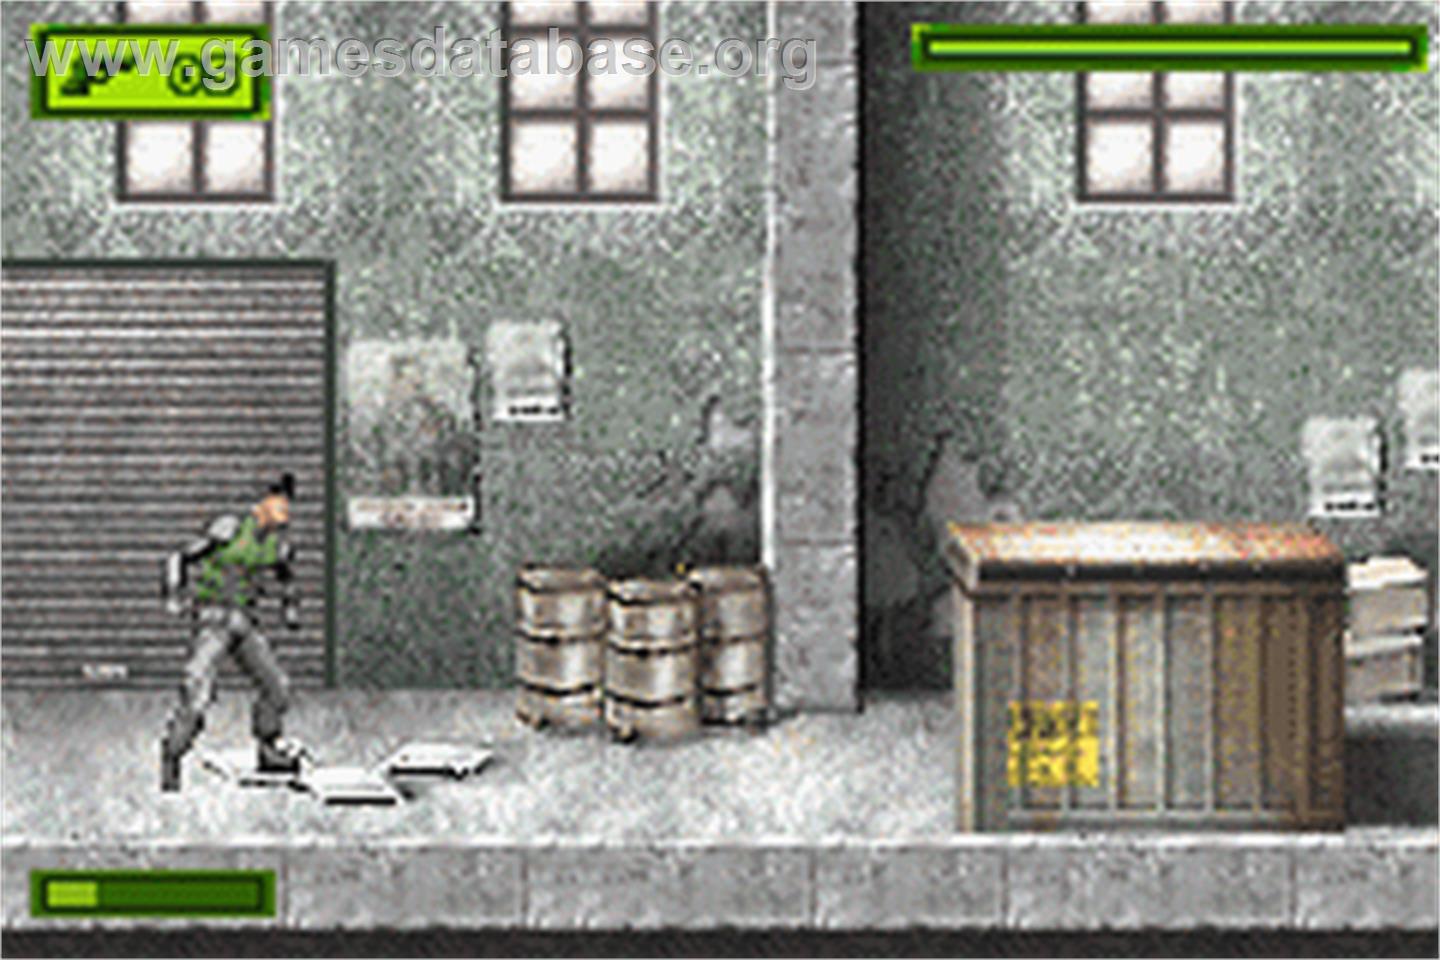 Tom Clancy's Splinter Cell - Nintendo Game Boy Advance - Artwork - In Game